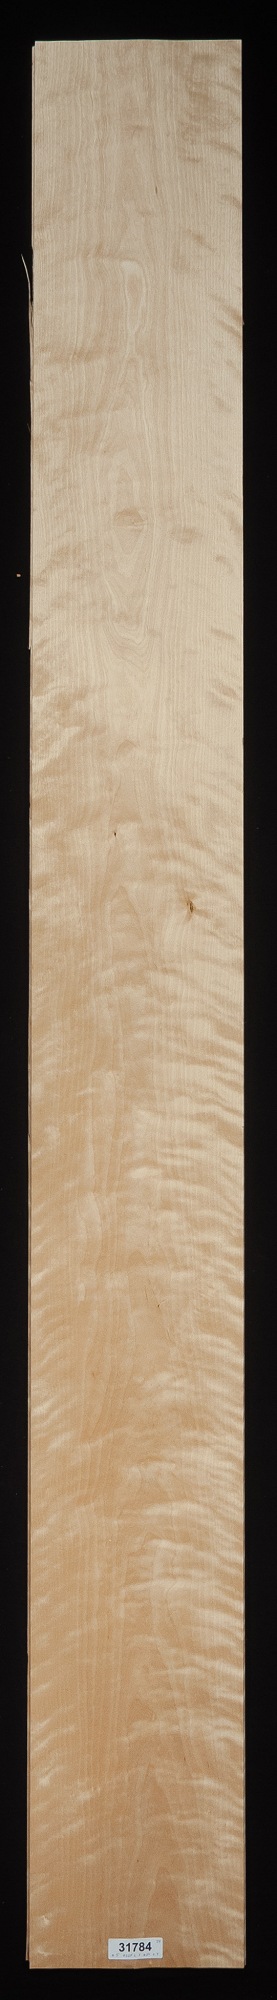 AAA Figured Birch (White) Veneer Sheet 